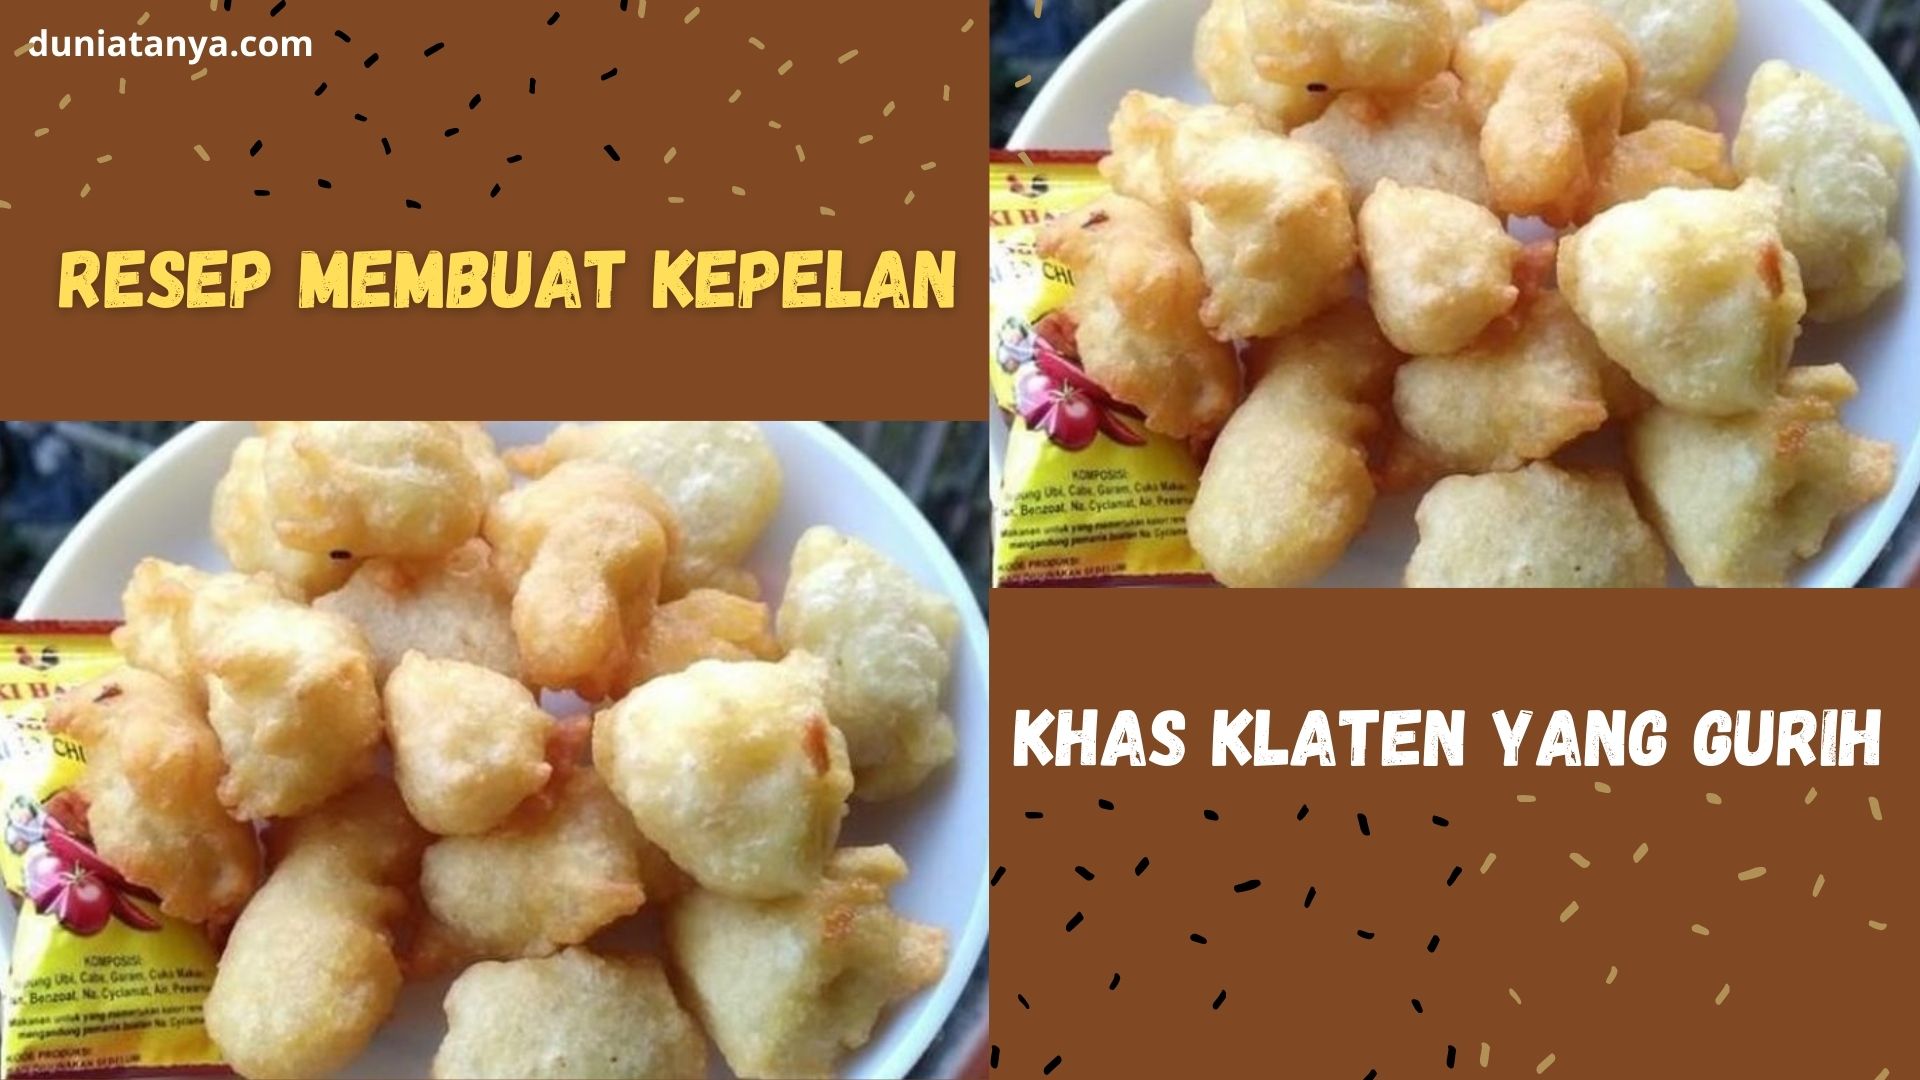 You are currently viewing Resep Membuat Kepelan Khas Klaten Yang Gurih